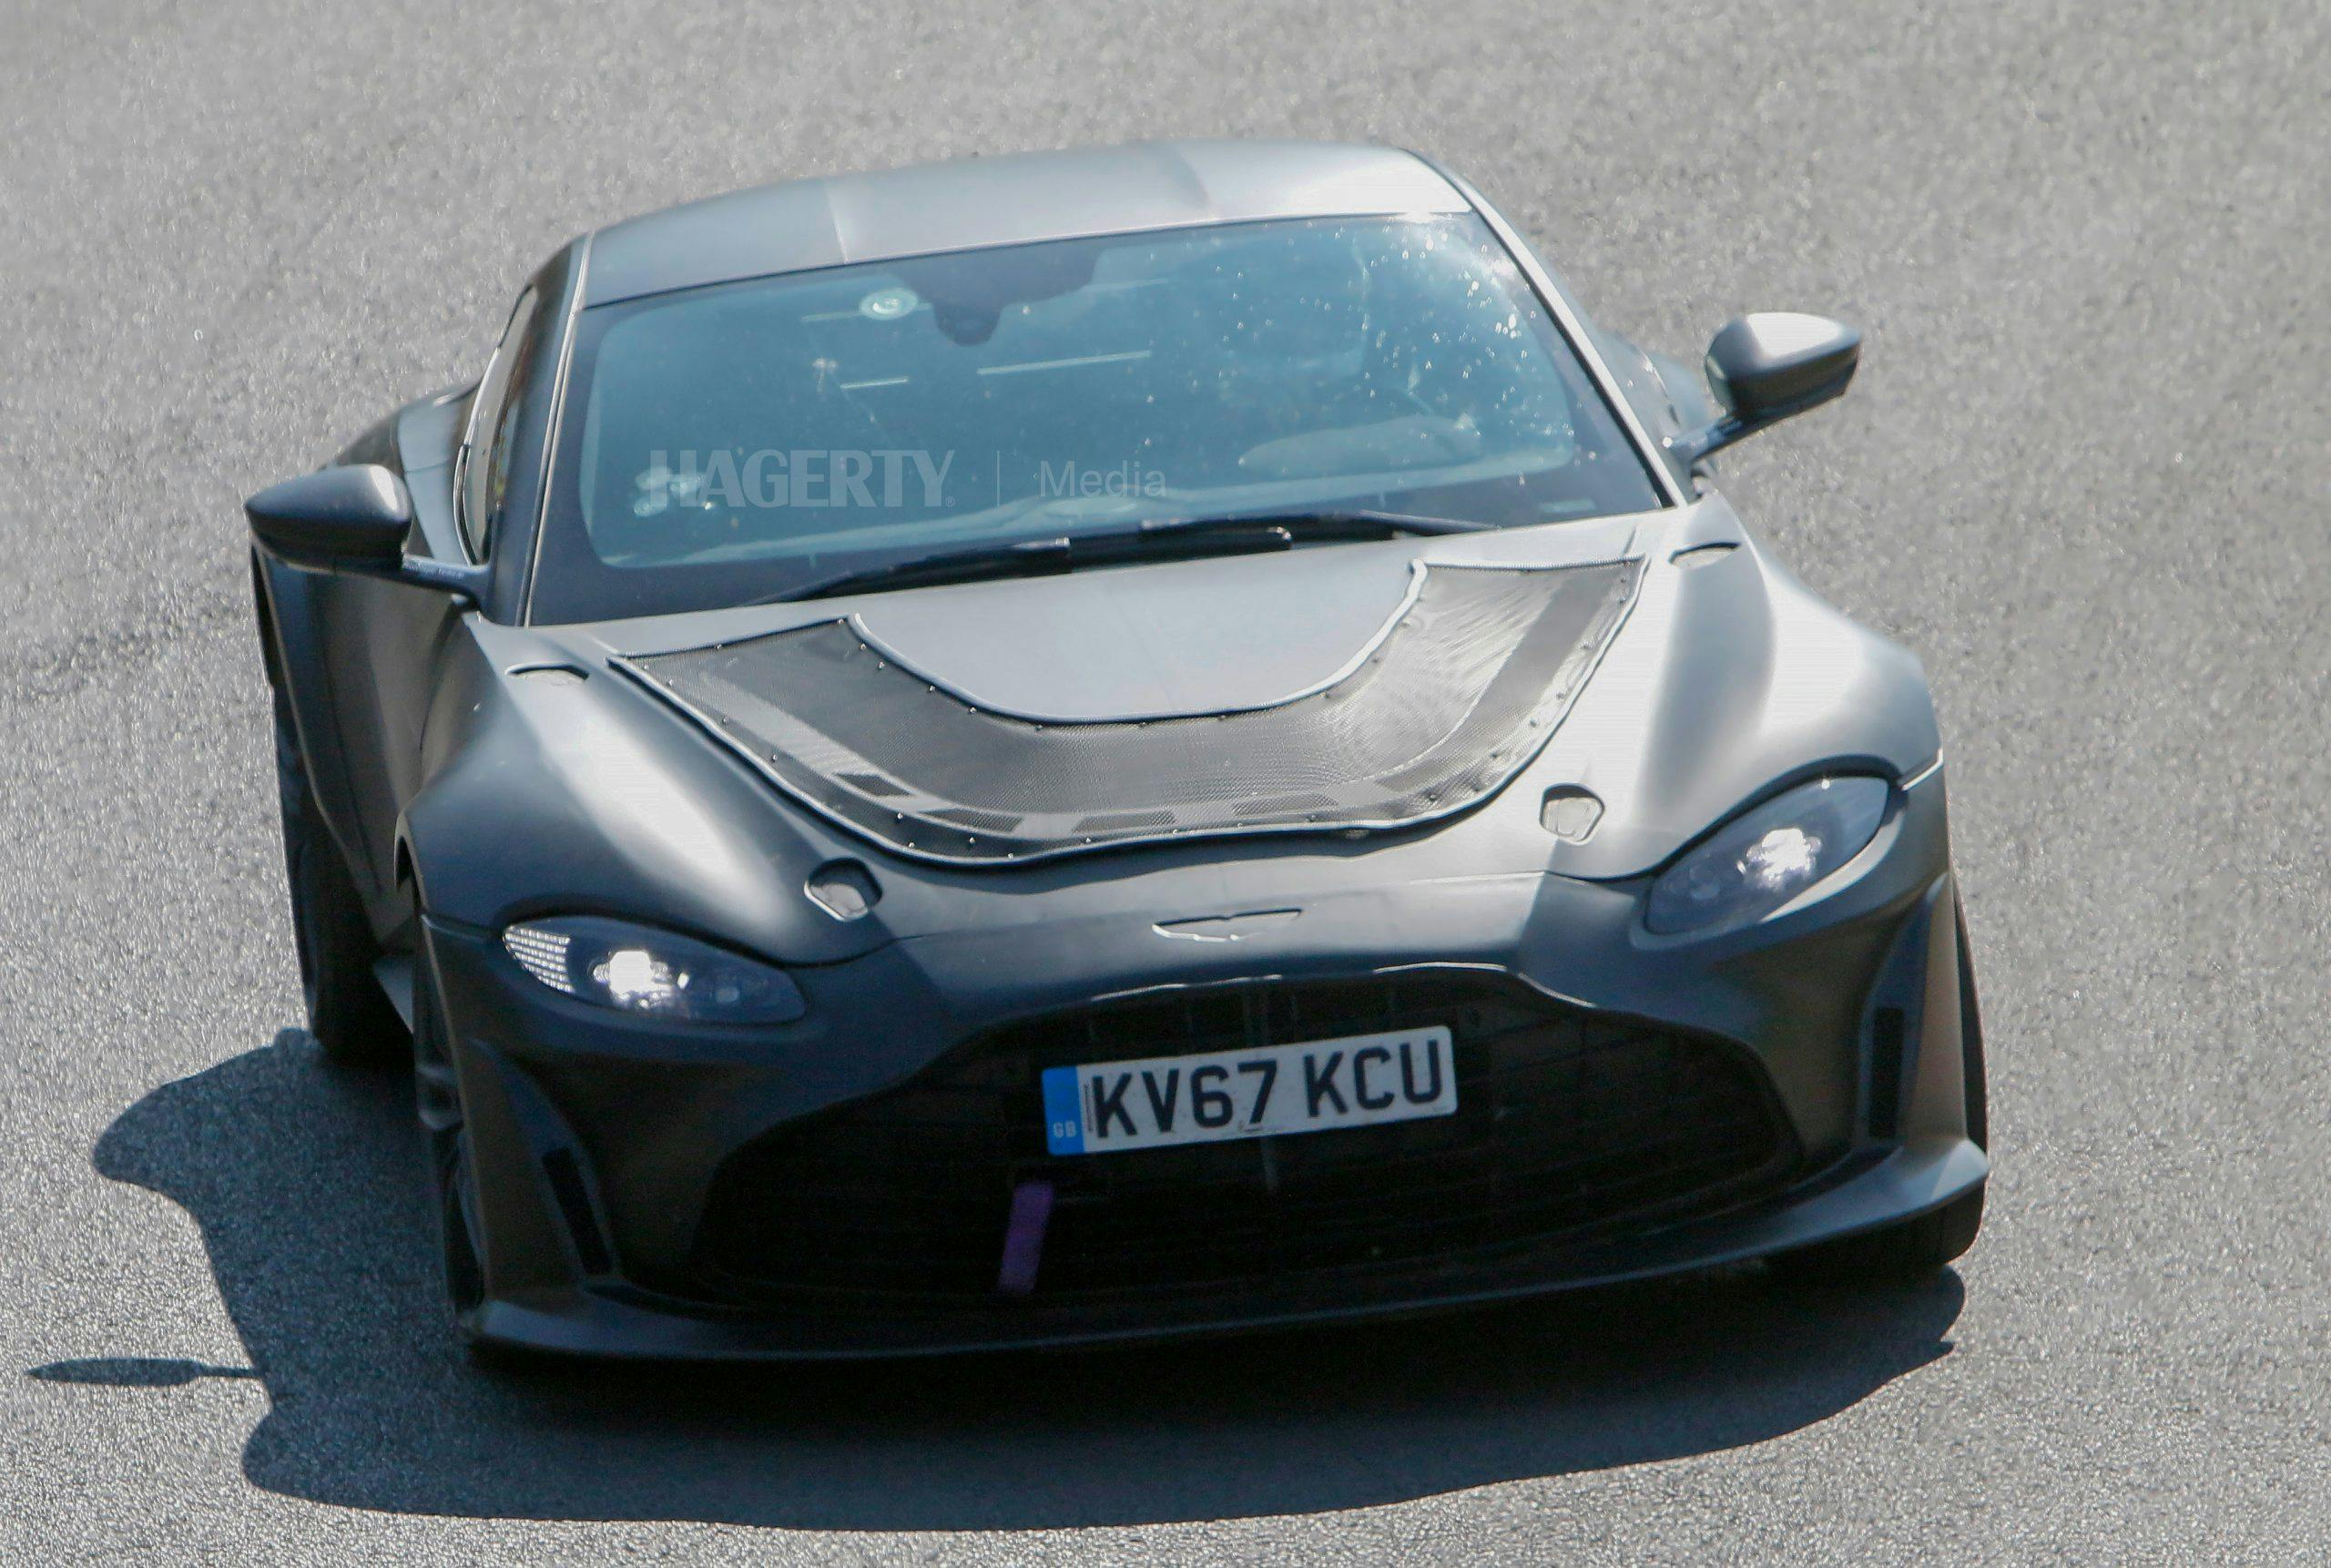 Aston Martin Vantage mule spy shot front